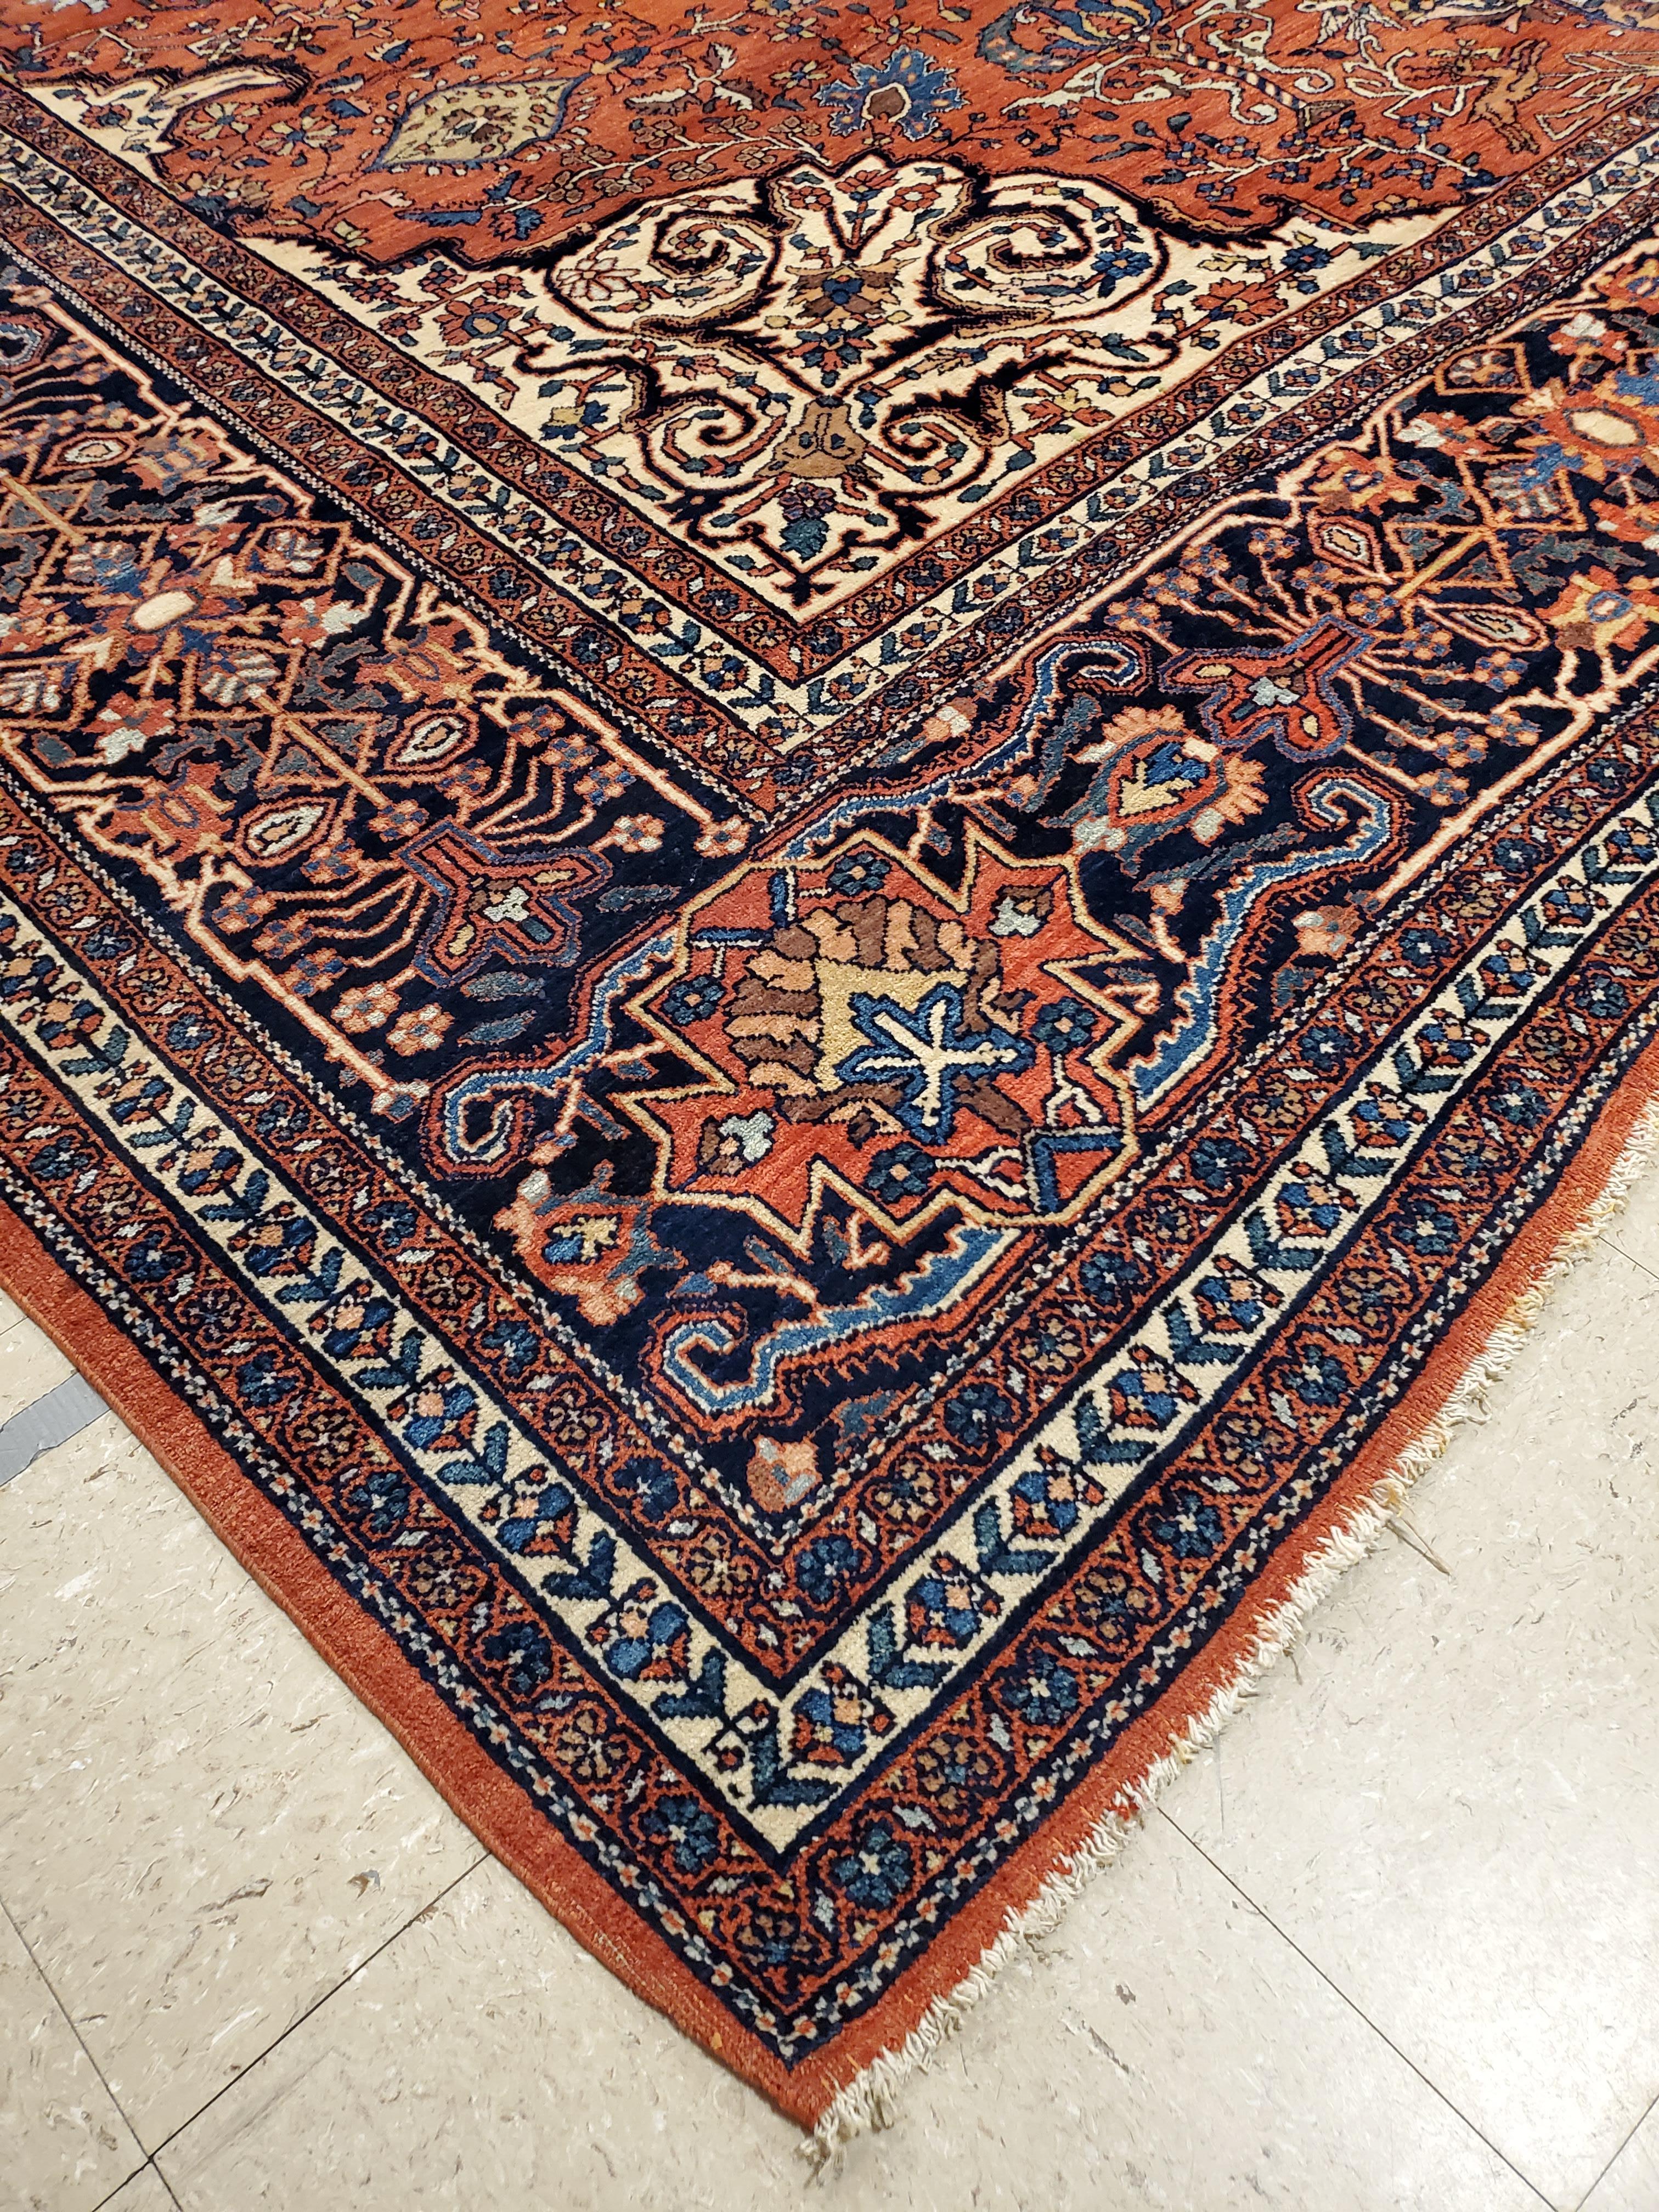 19th Century Antique Farahan Sarouk Carpet, Handmade Oriental Rug, Red, Navy, Fine Details For Sale